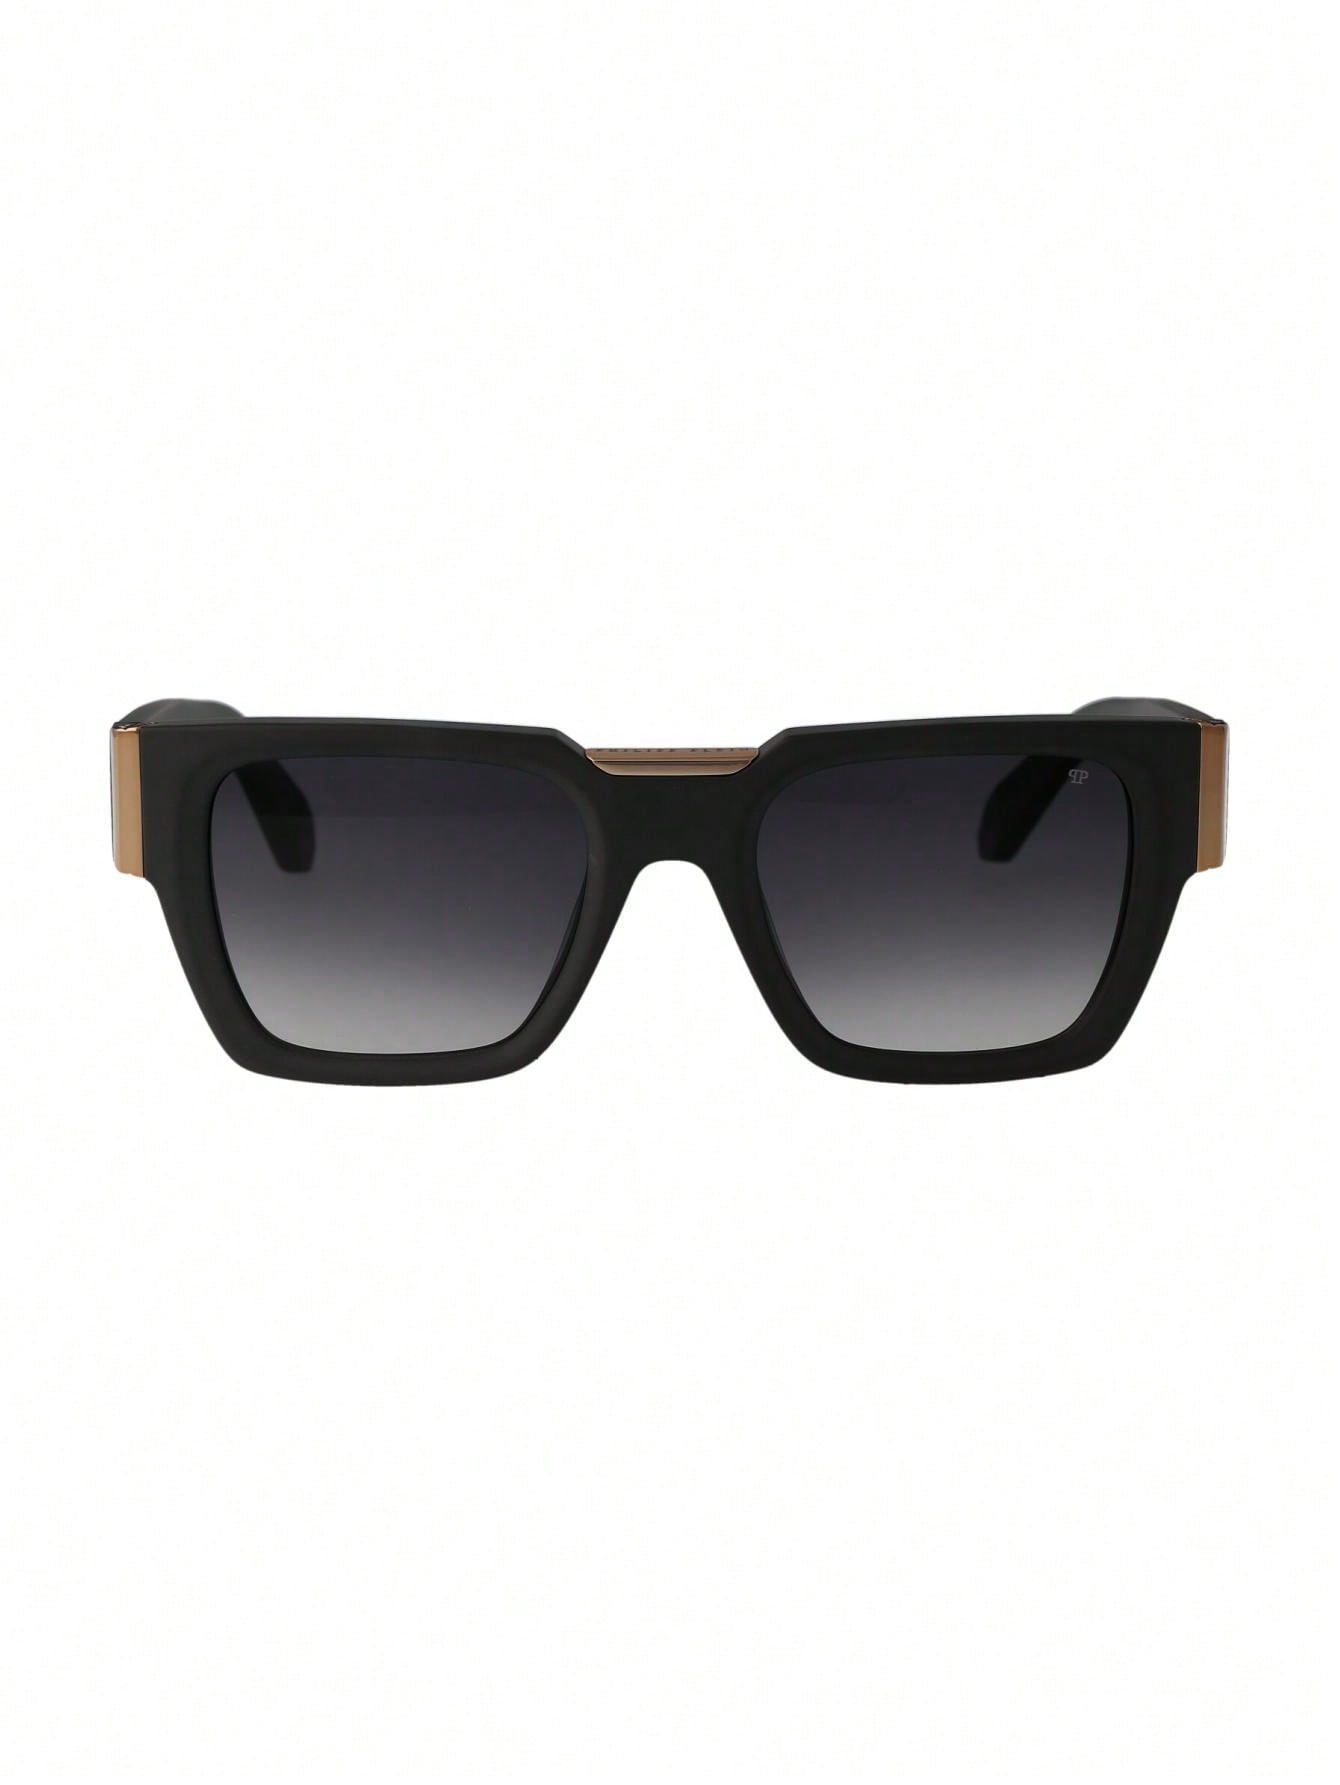 Мужские солнцезащитные очки Philipp Plein DECOR SPP095M0L46, многоцветный солнцезащитные очки philipp plein 006m 890x